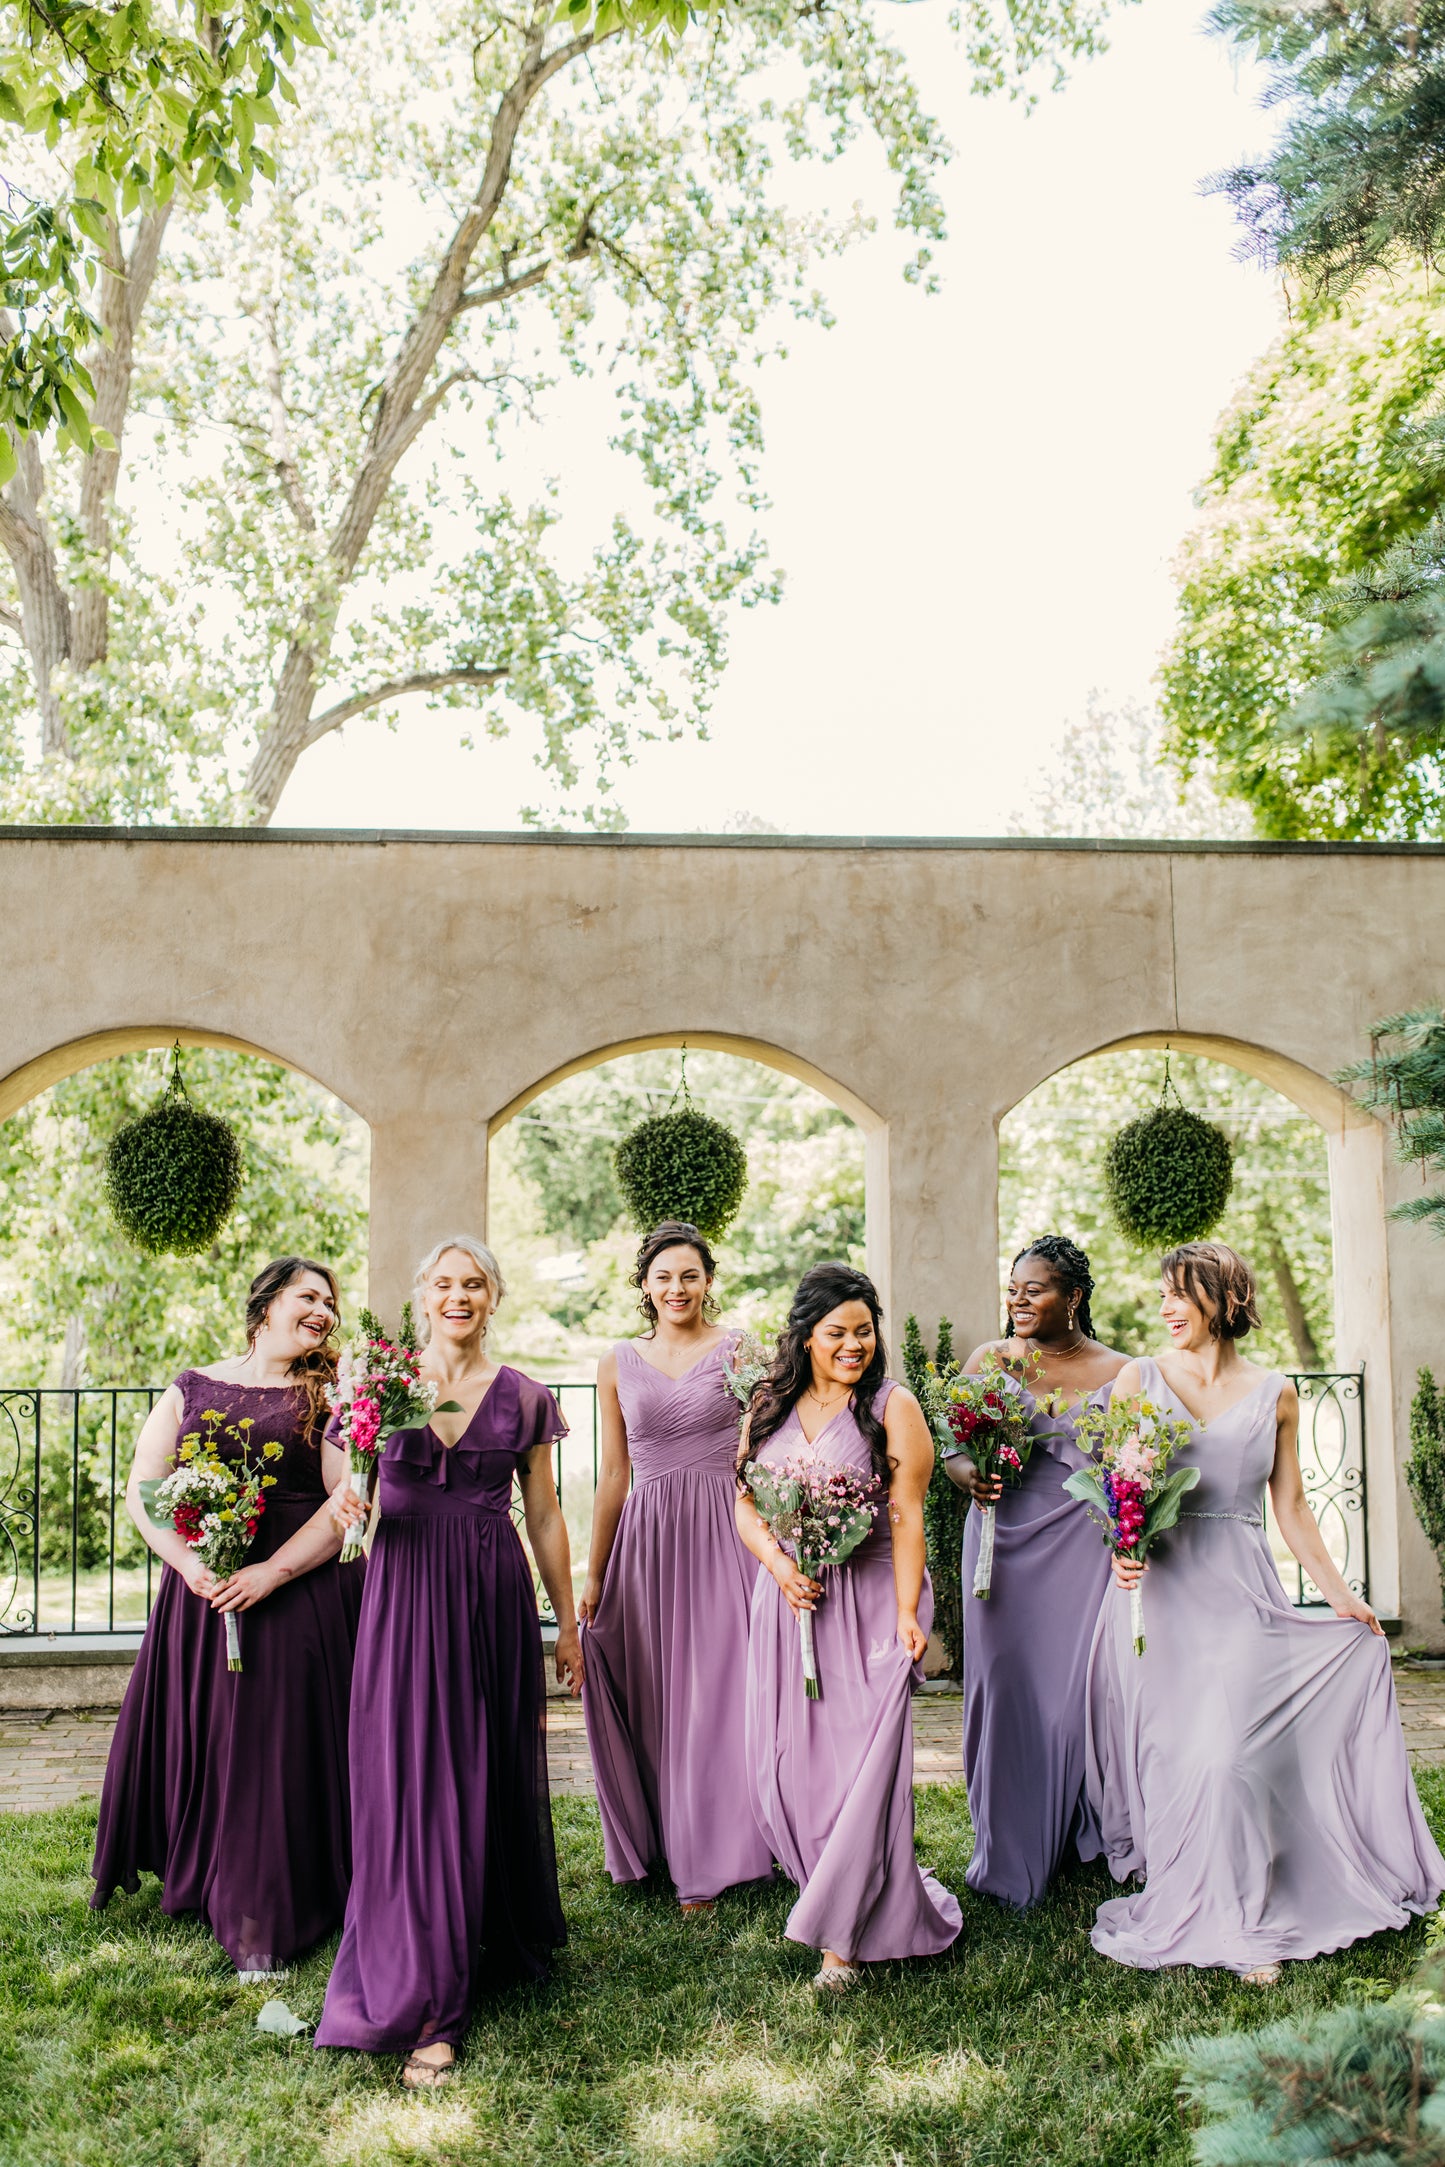 Mia (far right) wears the Madison dress